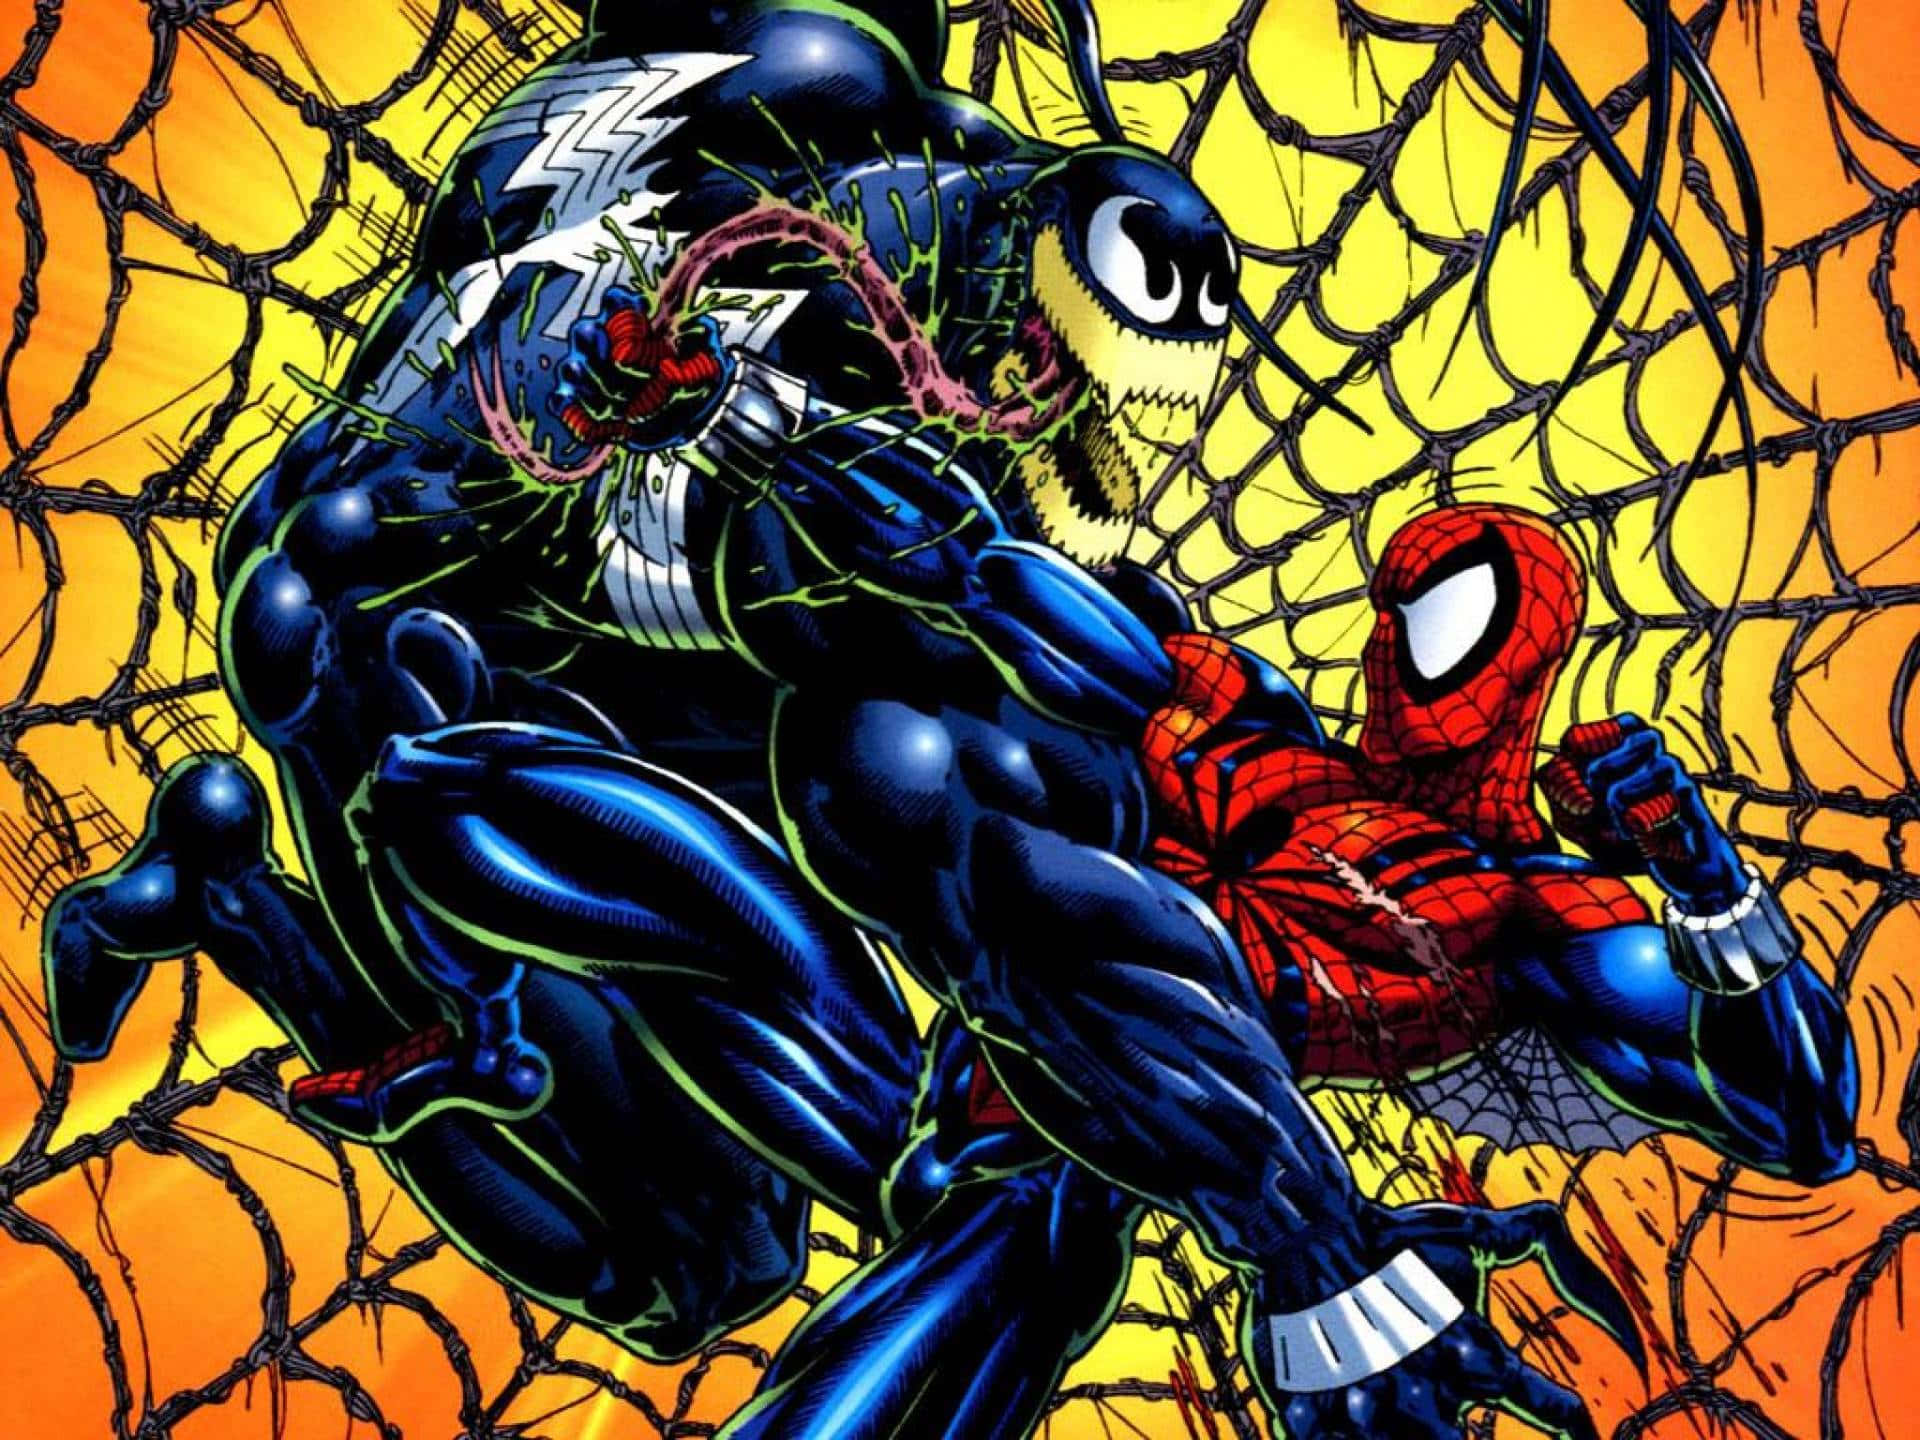 Venom And Spider Man Fighting In The Spider Web